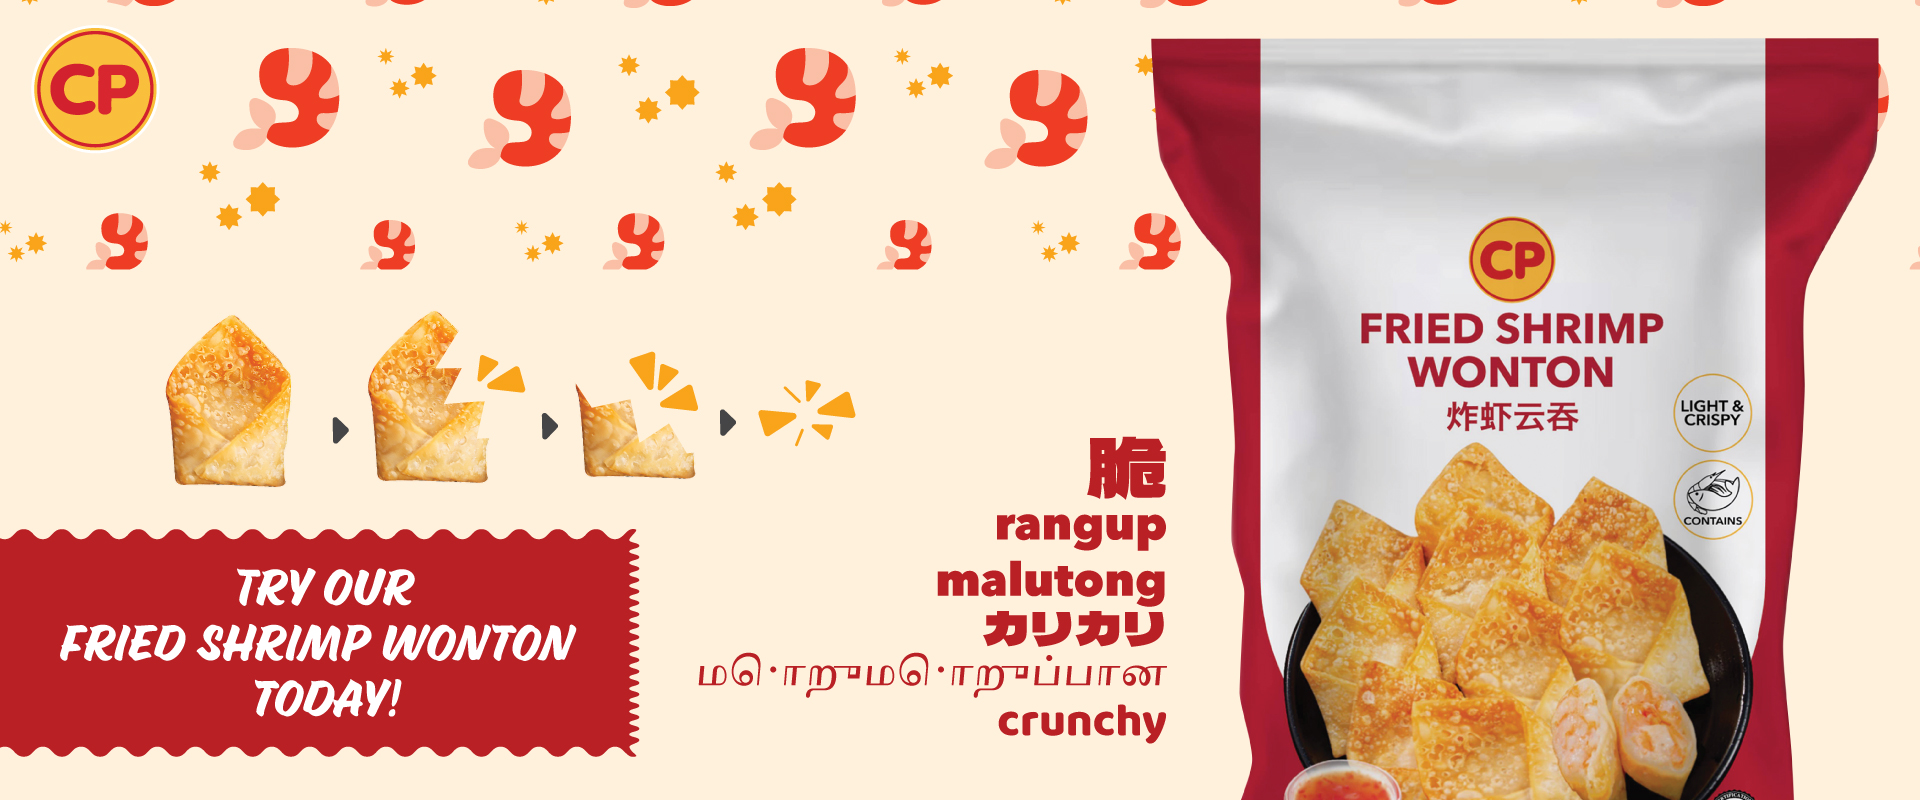 Try the New Crunchy CP Fried Shrimp Wonton